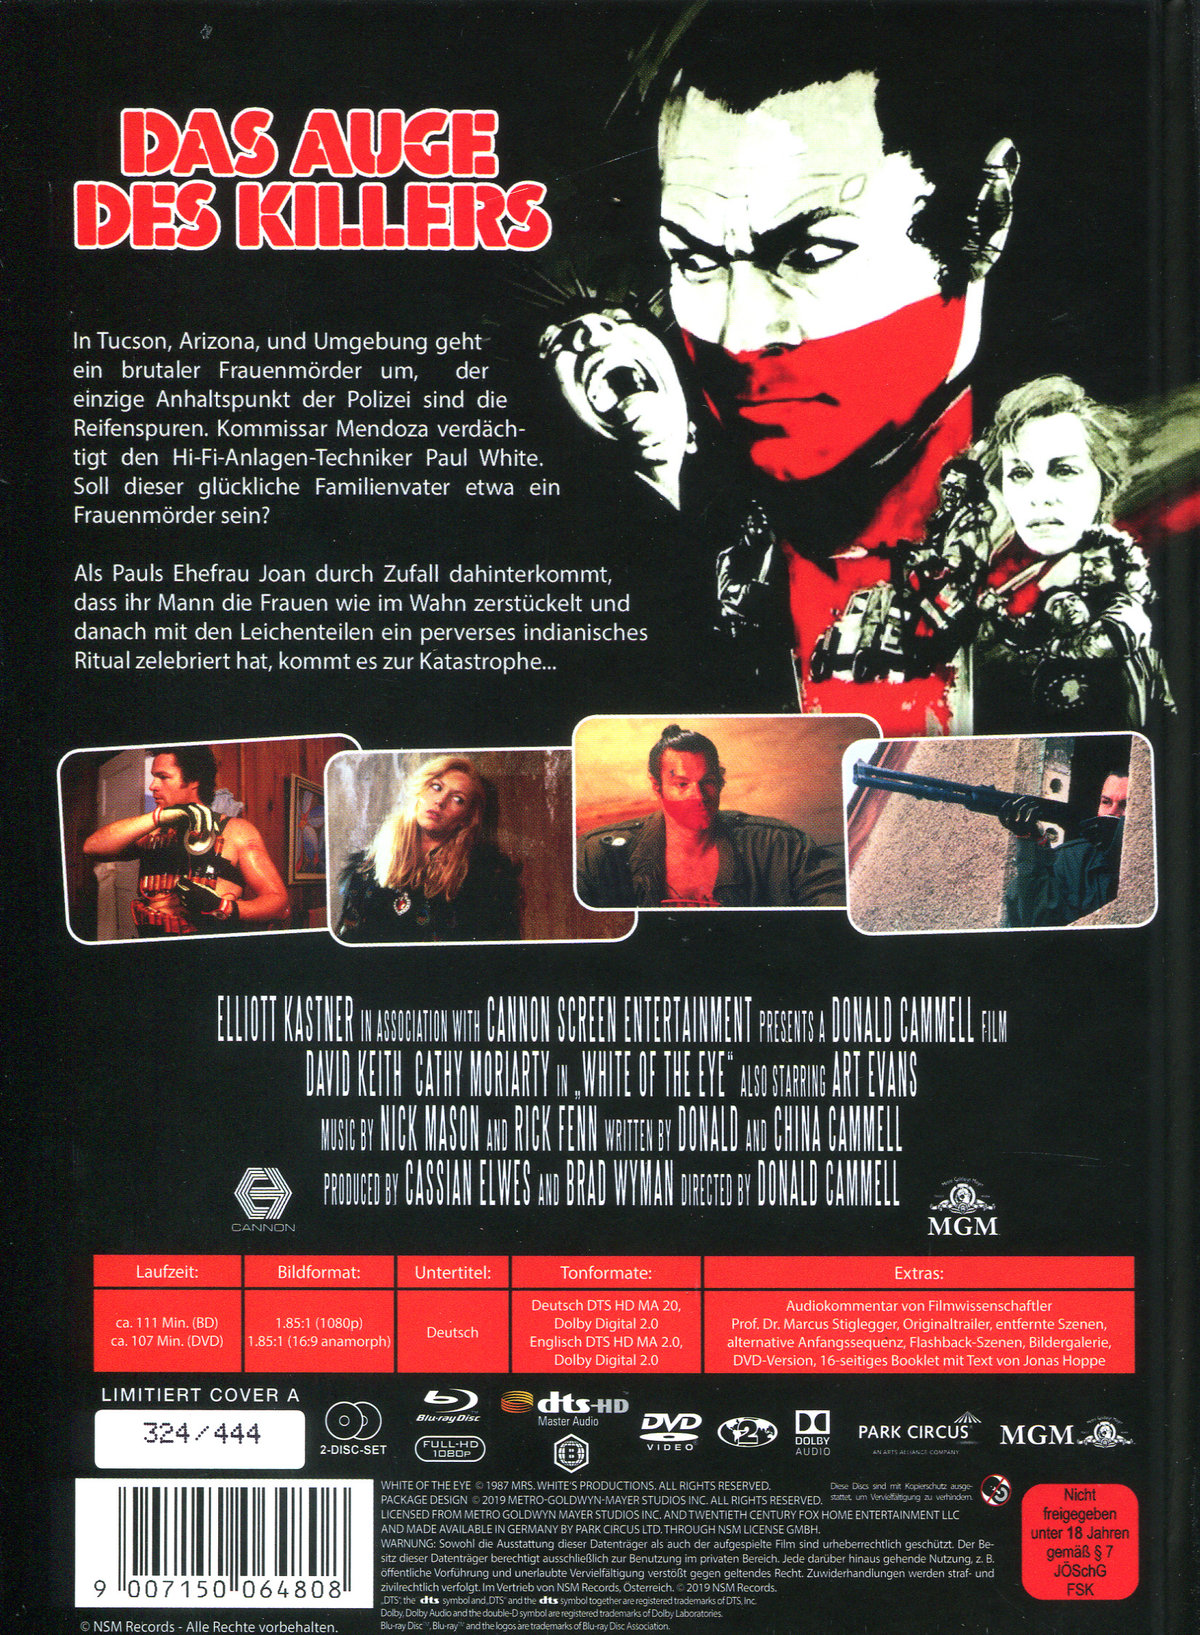 Auge des Killers Das - Uncut Mediabook Edition (DVD+blu-ray) (A)